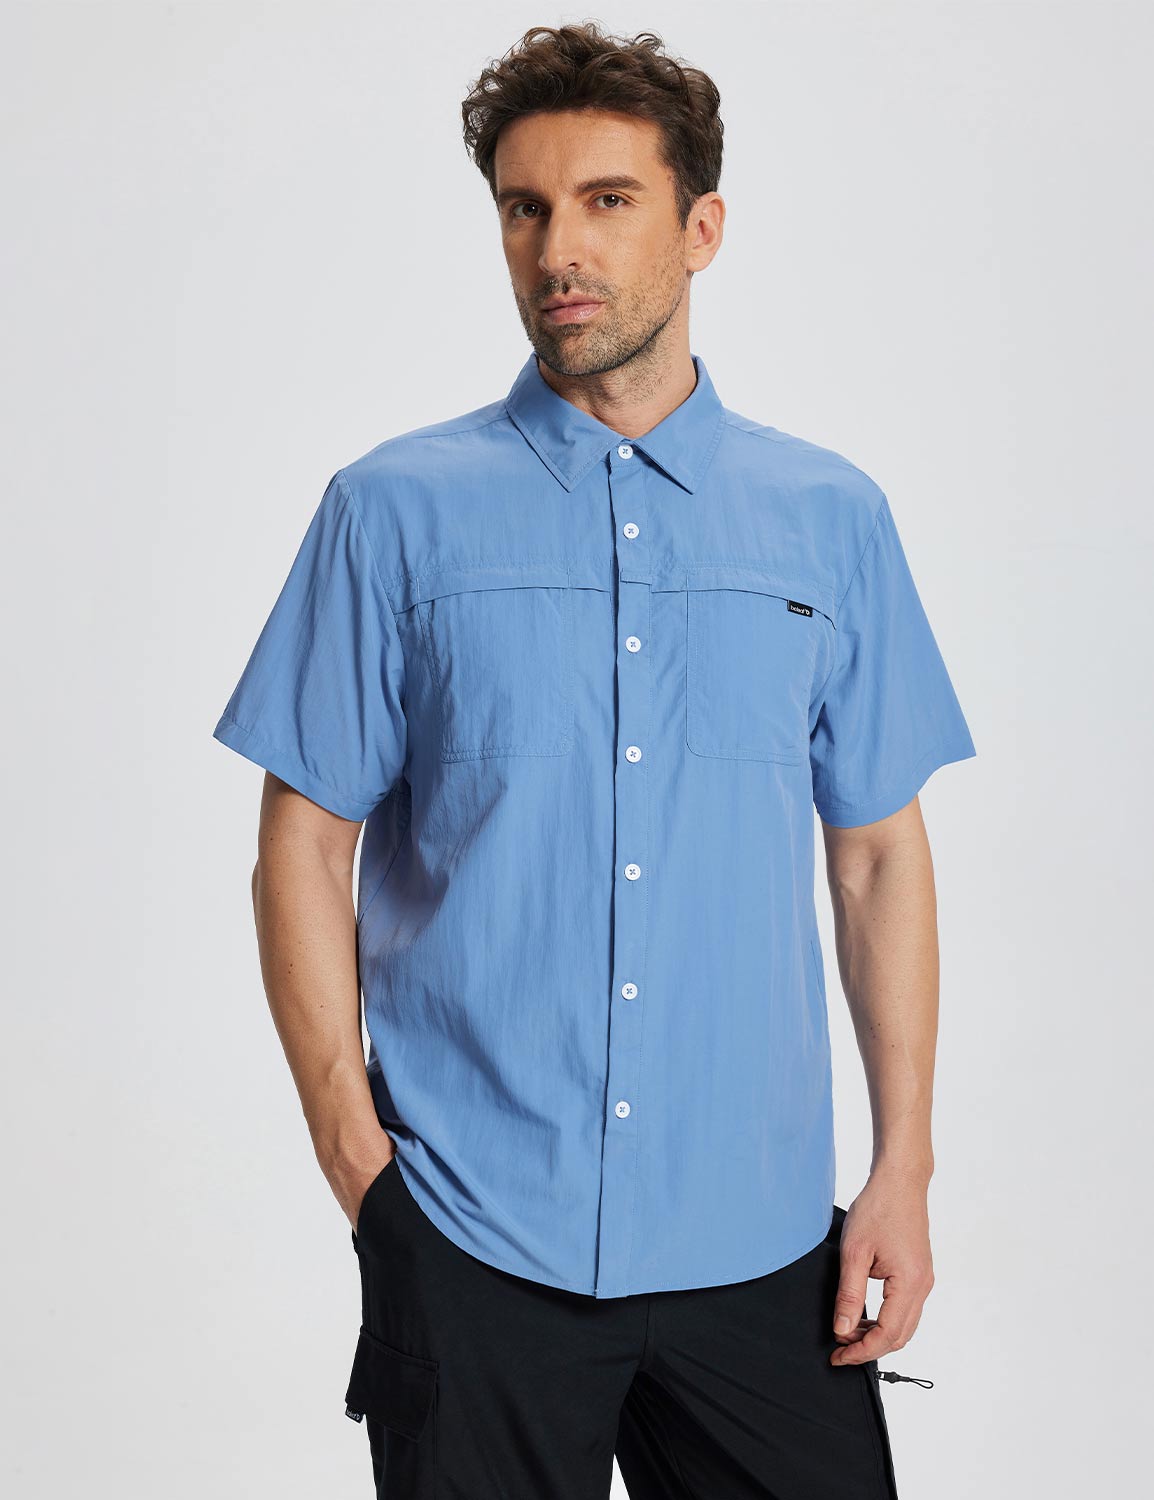 Baleaf Men's Fishing Shirts for Ultimate Comfort XL / Ashleigh Blue